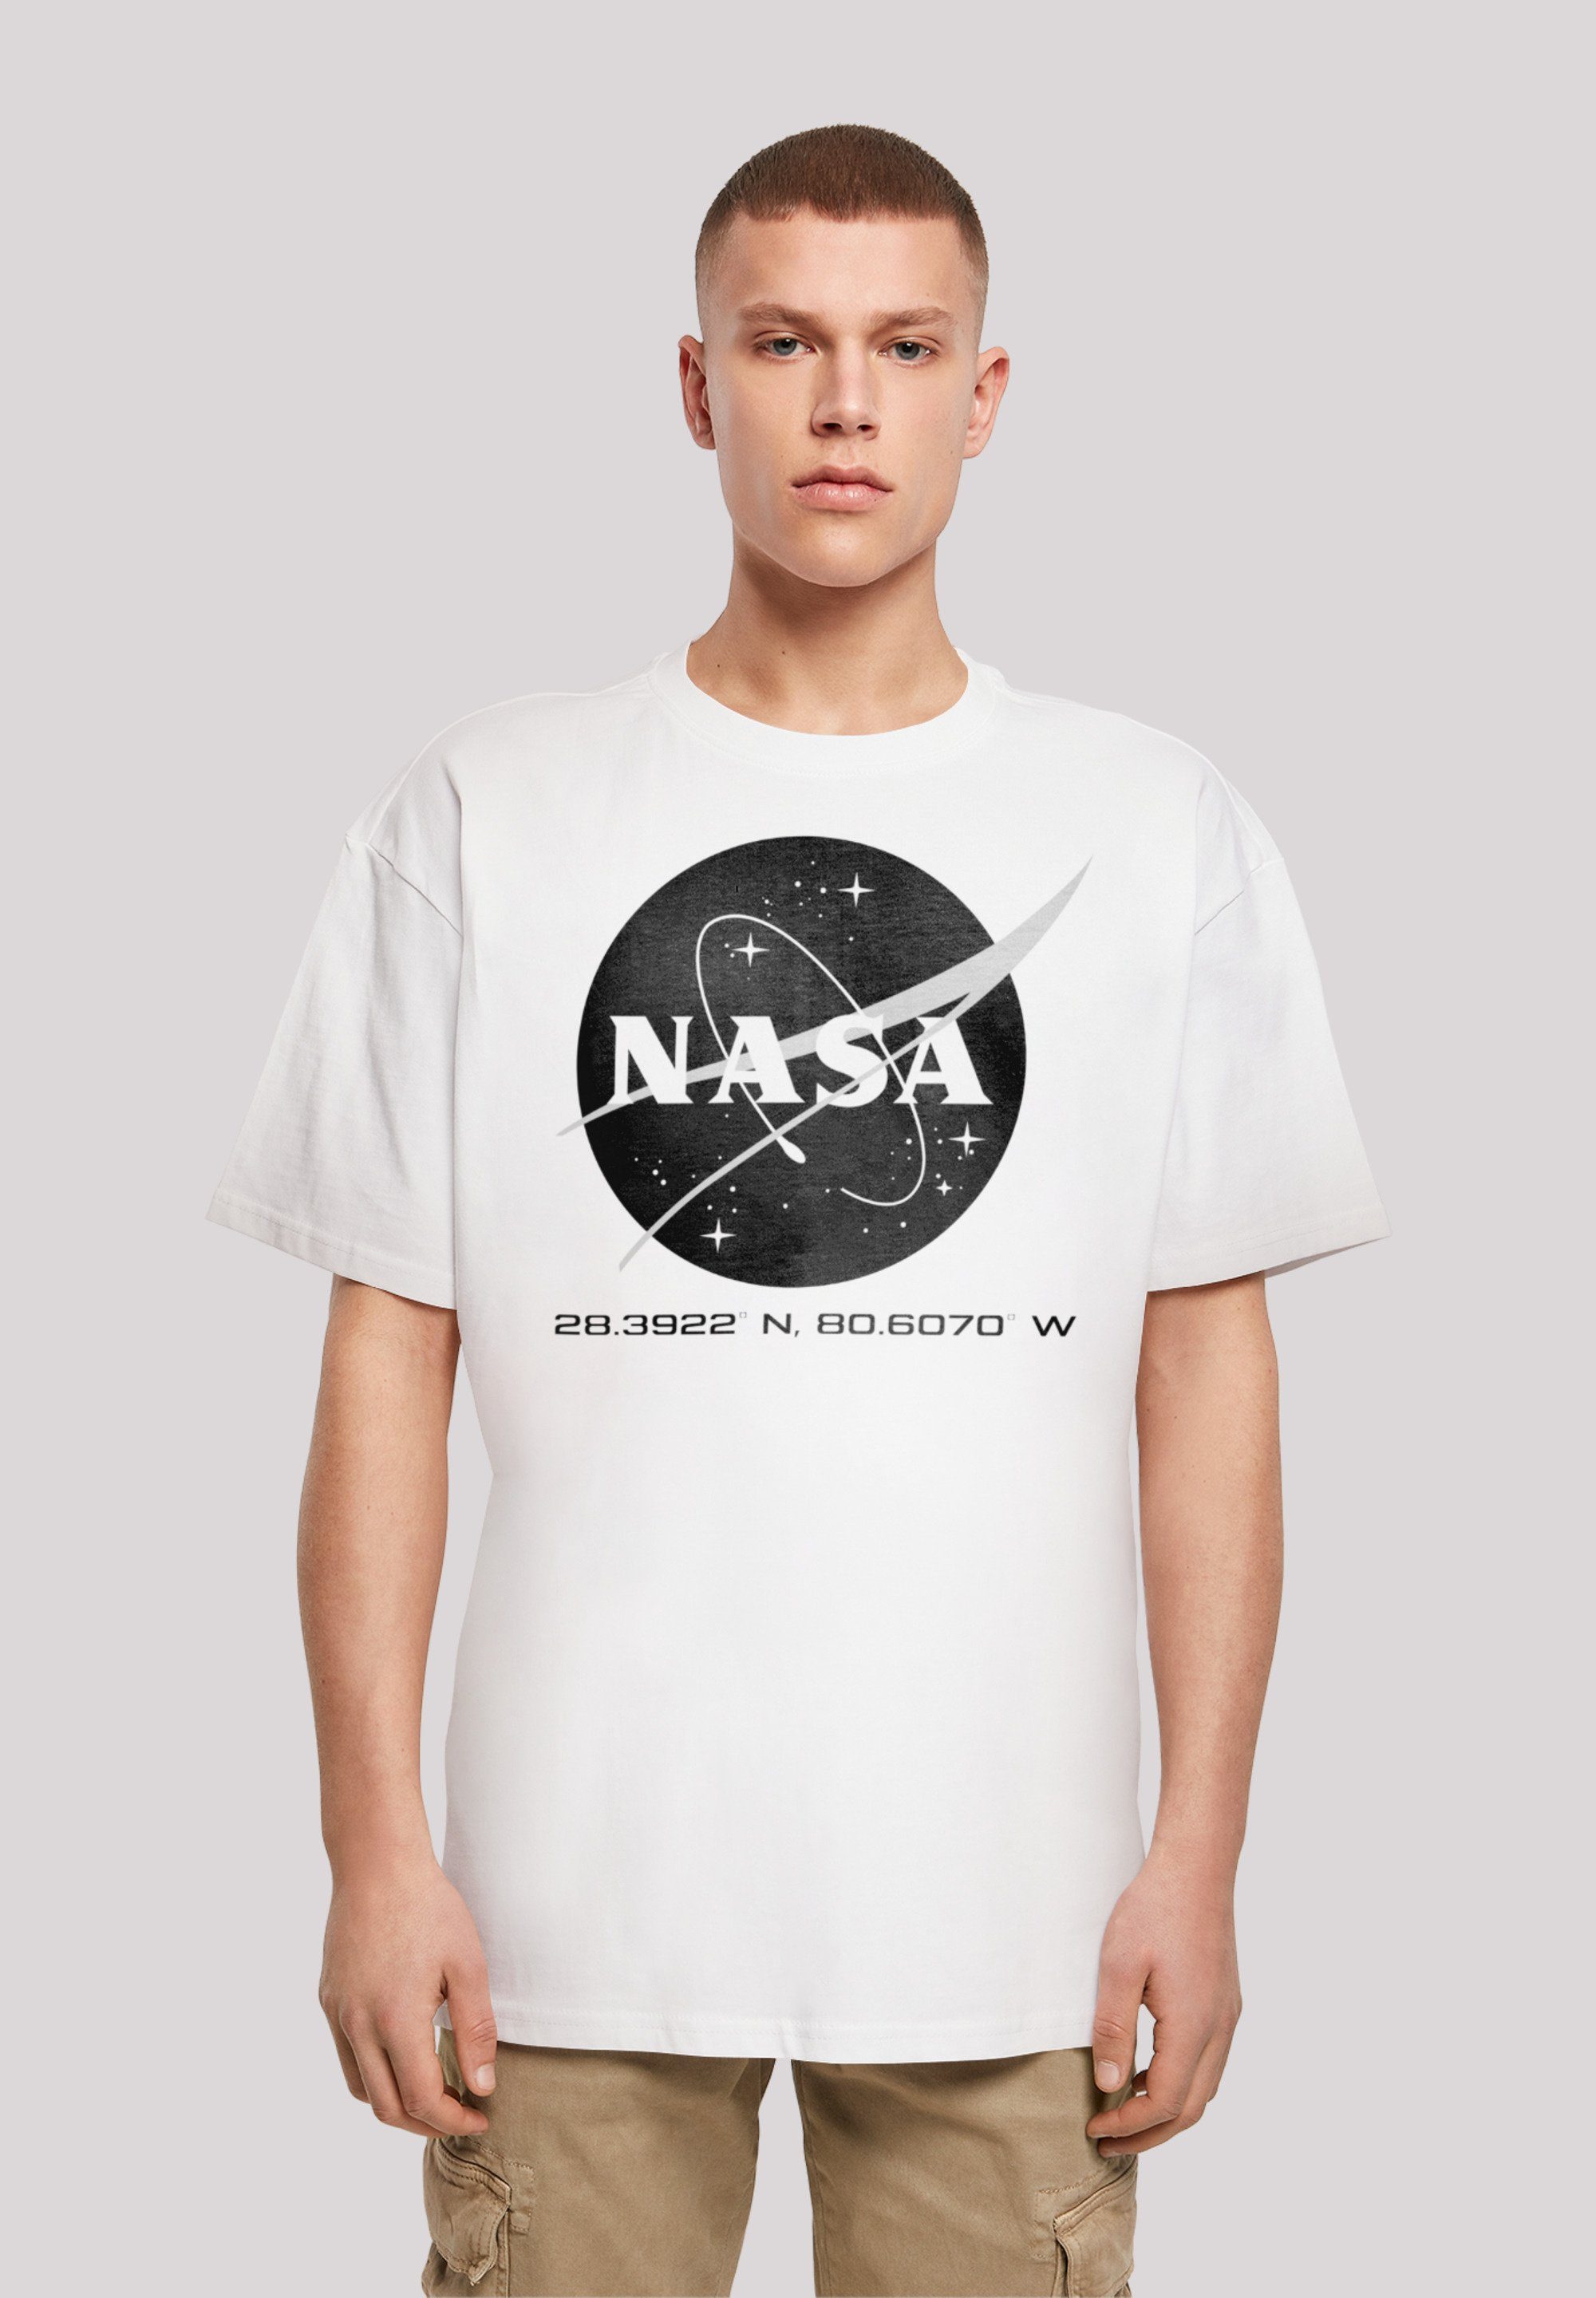 PHIBER FASHION Logo NASA METAVERSE F4NT4STIC weiß T-Shirt Print Meatball